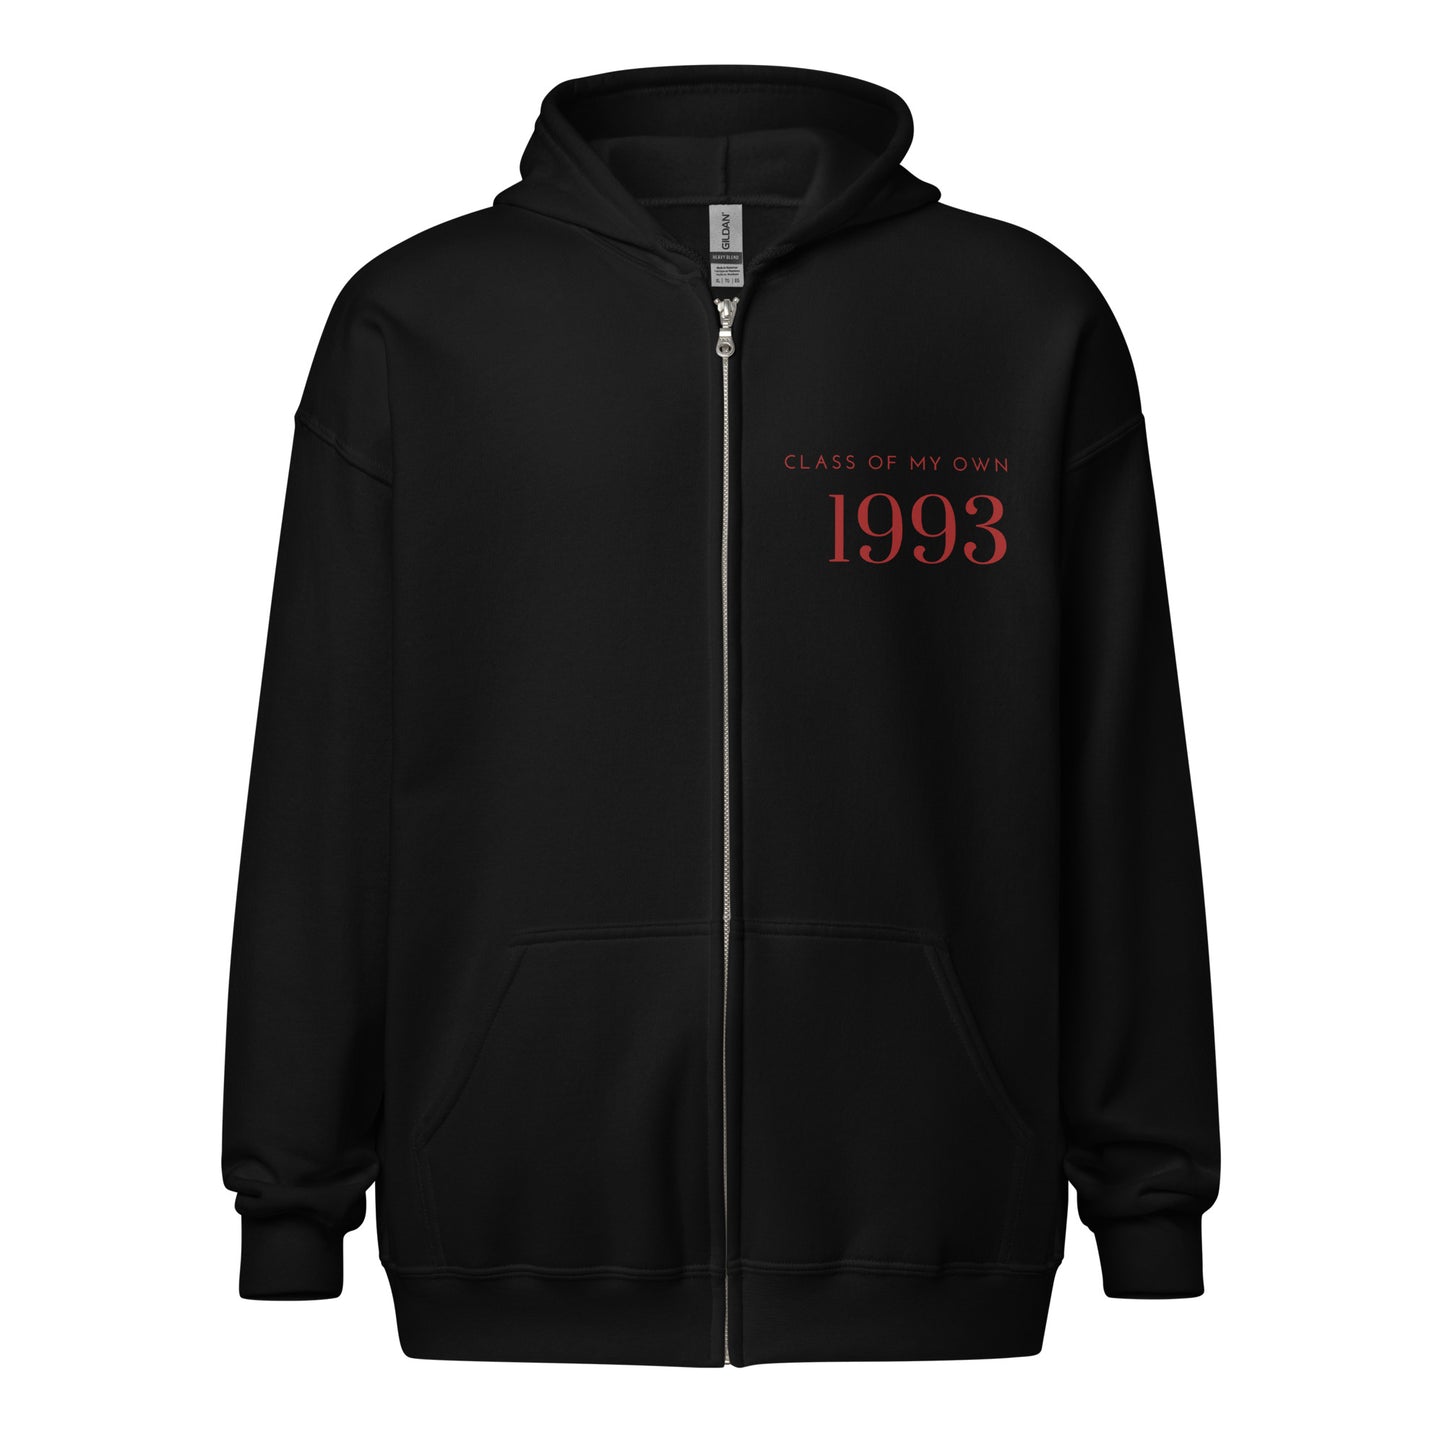 Class of My Own 1993 zip hoodie